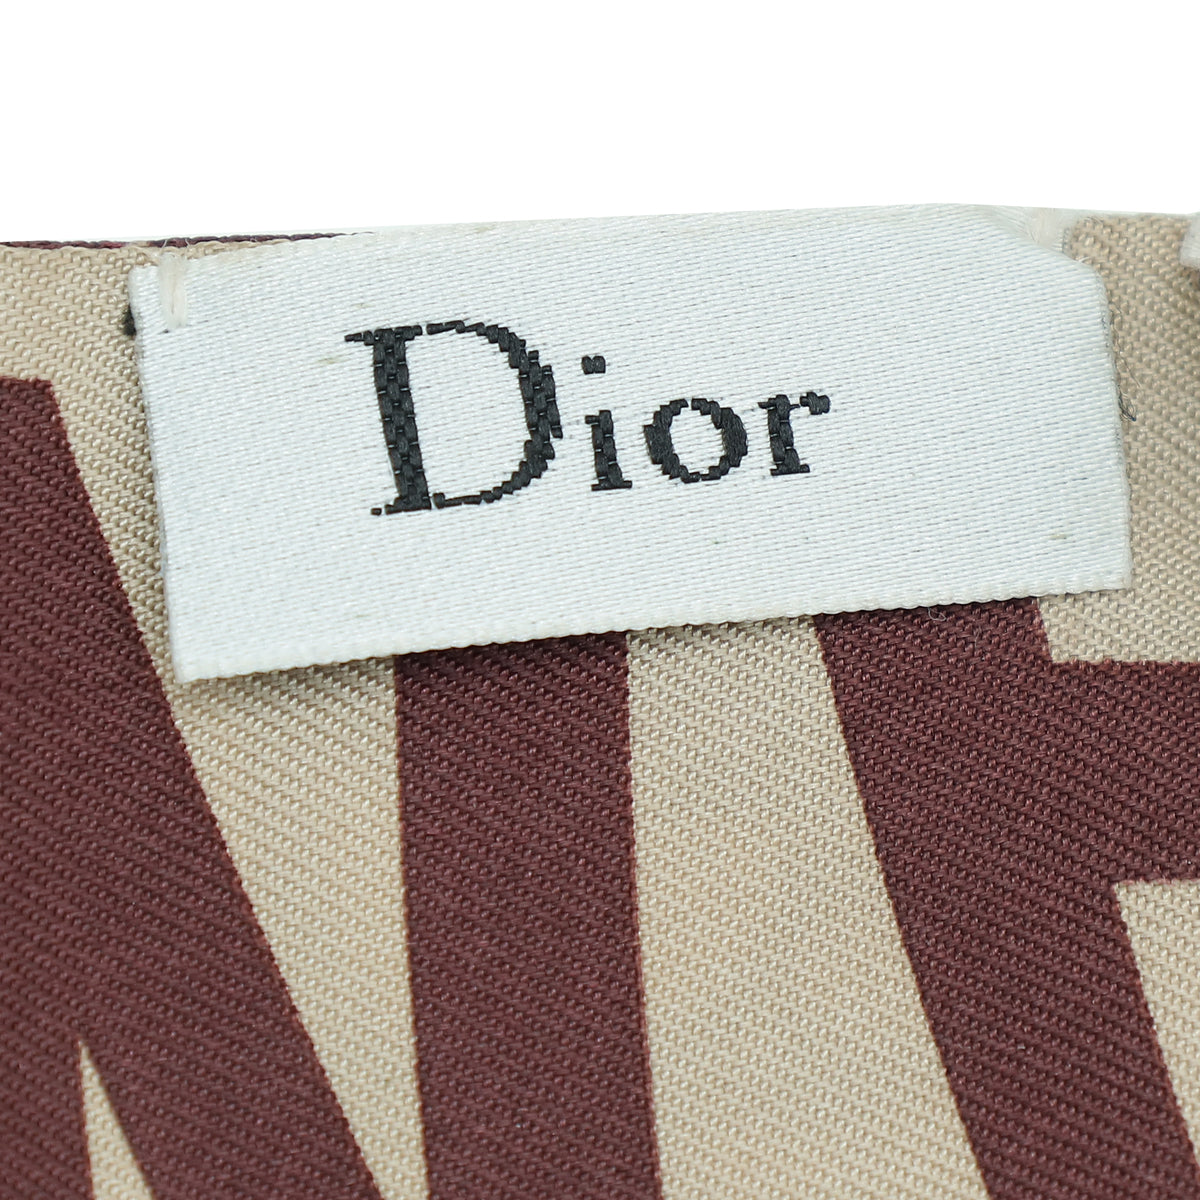 Christian Dior Burgundy Silk Oblique Mitzah Scarf